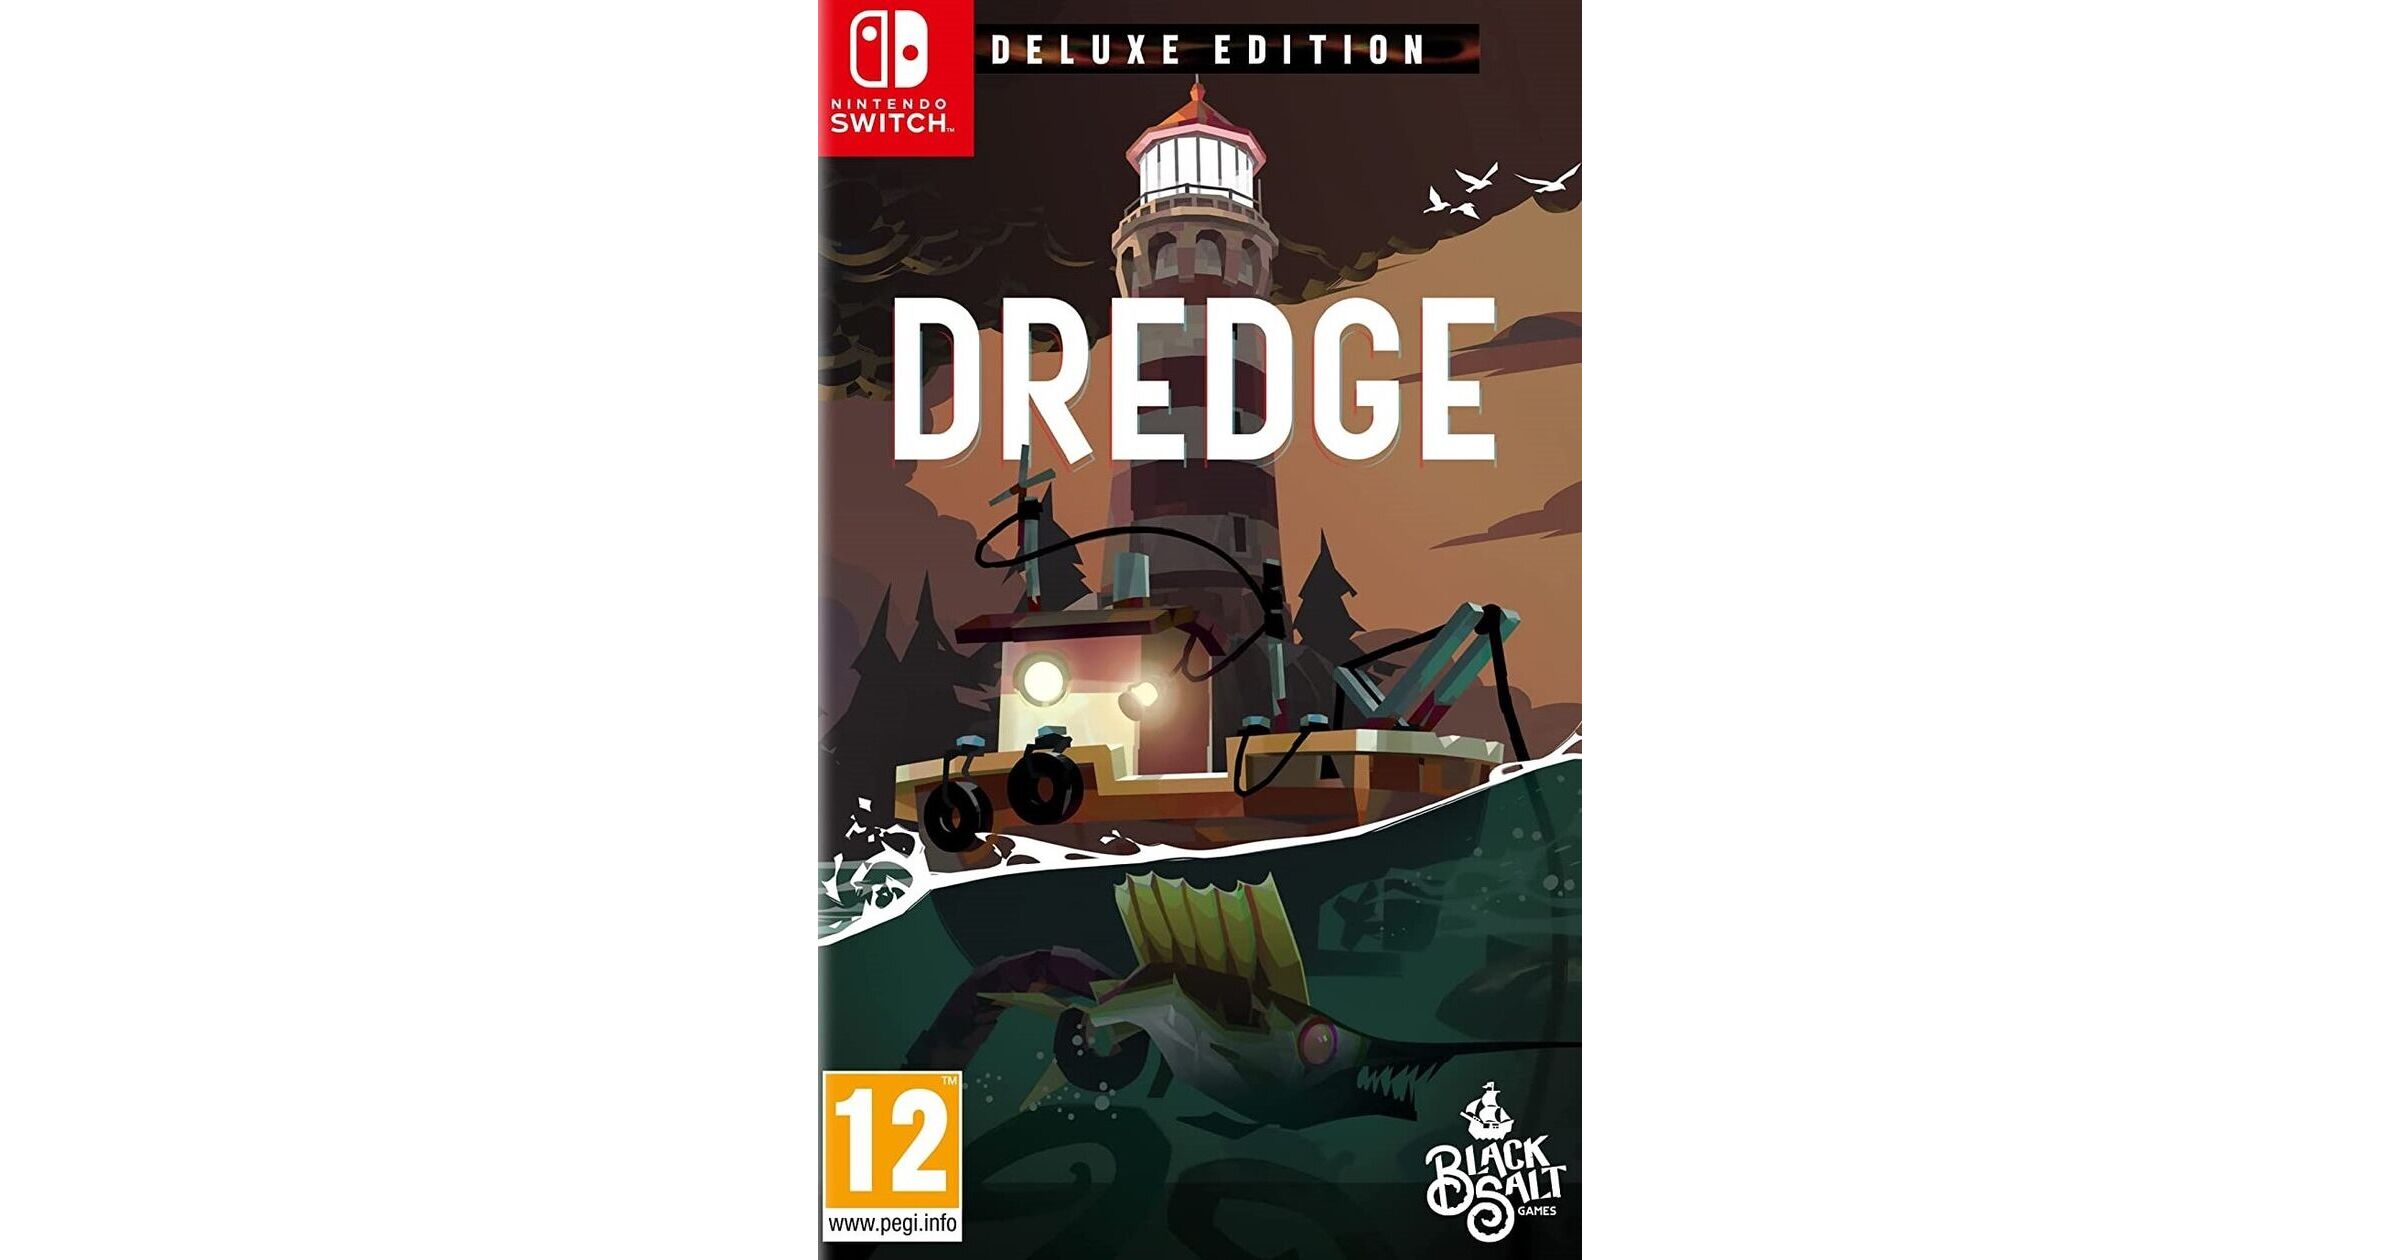 DREDGE Deluxe Edition (Nintendo Switch) (Nintendo Switch) (UK IMPORT)